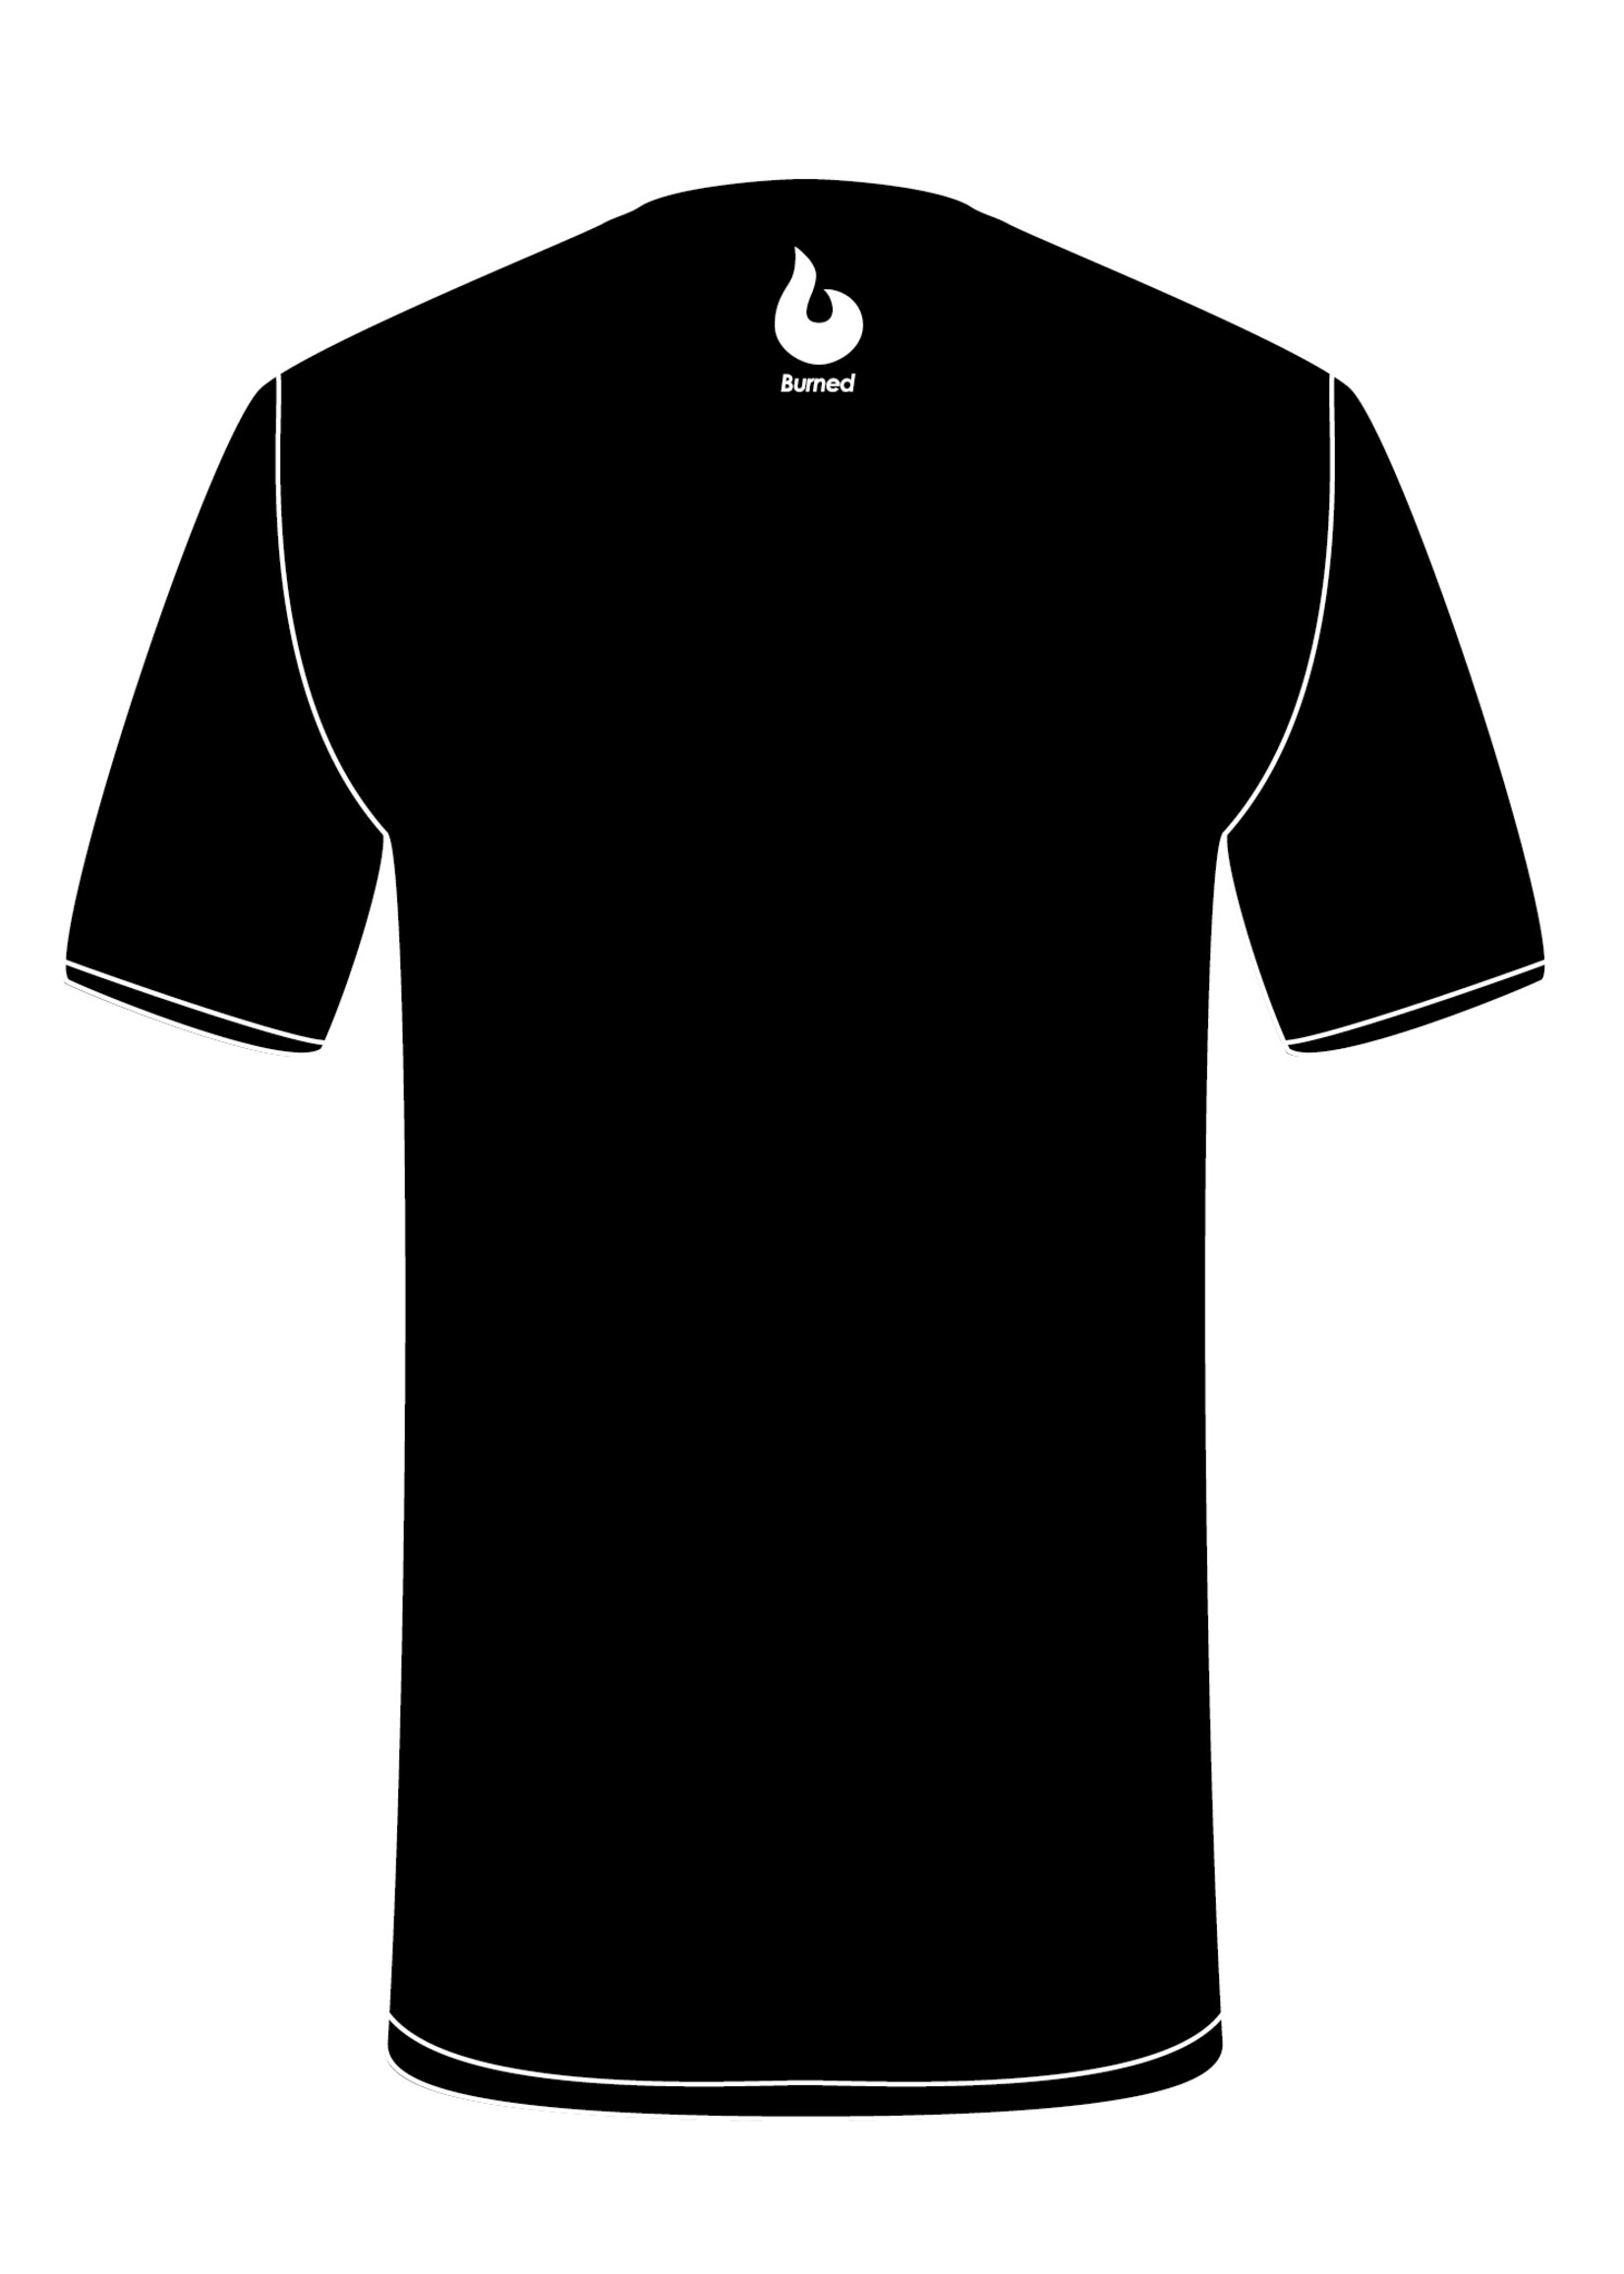 Burned Teamwear B.C. Agathos T-shirt Zwart Tekst